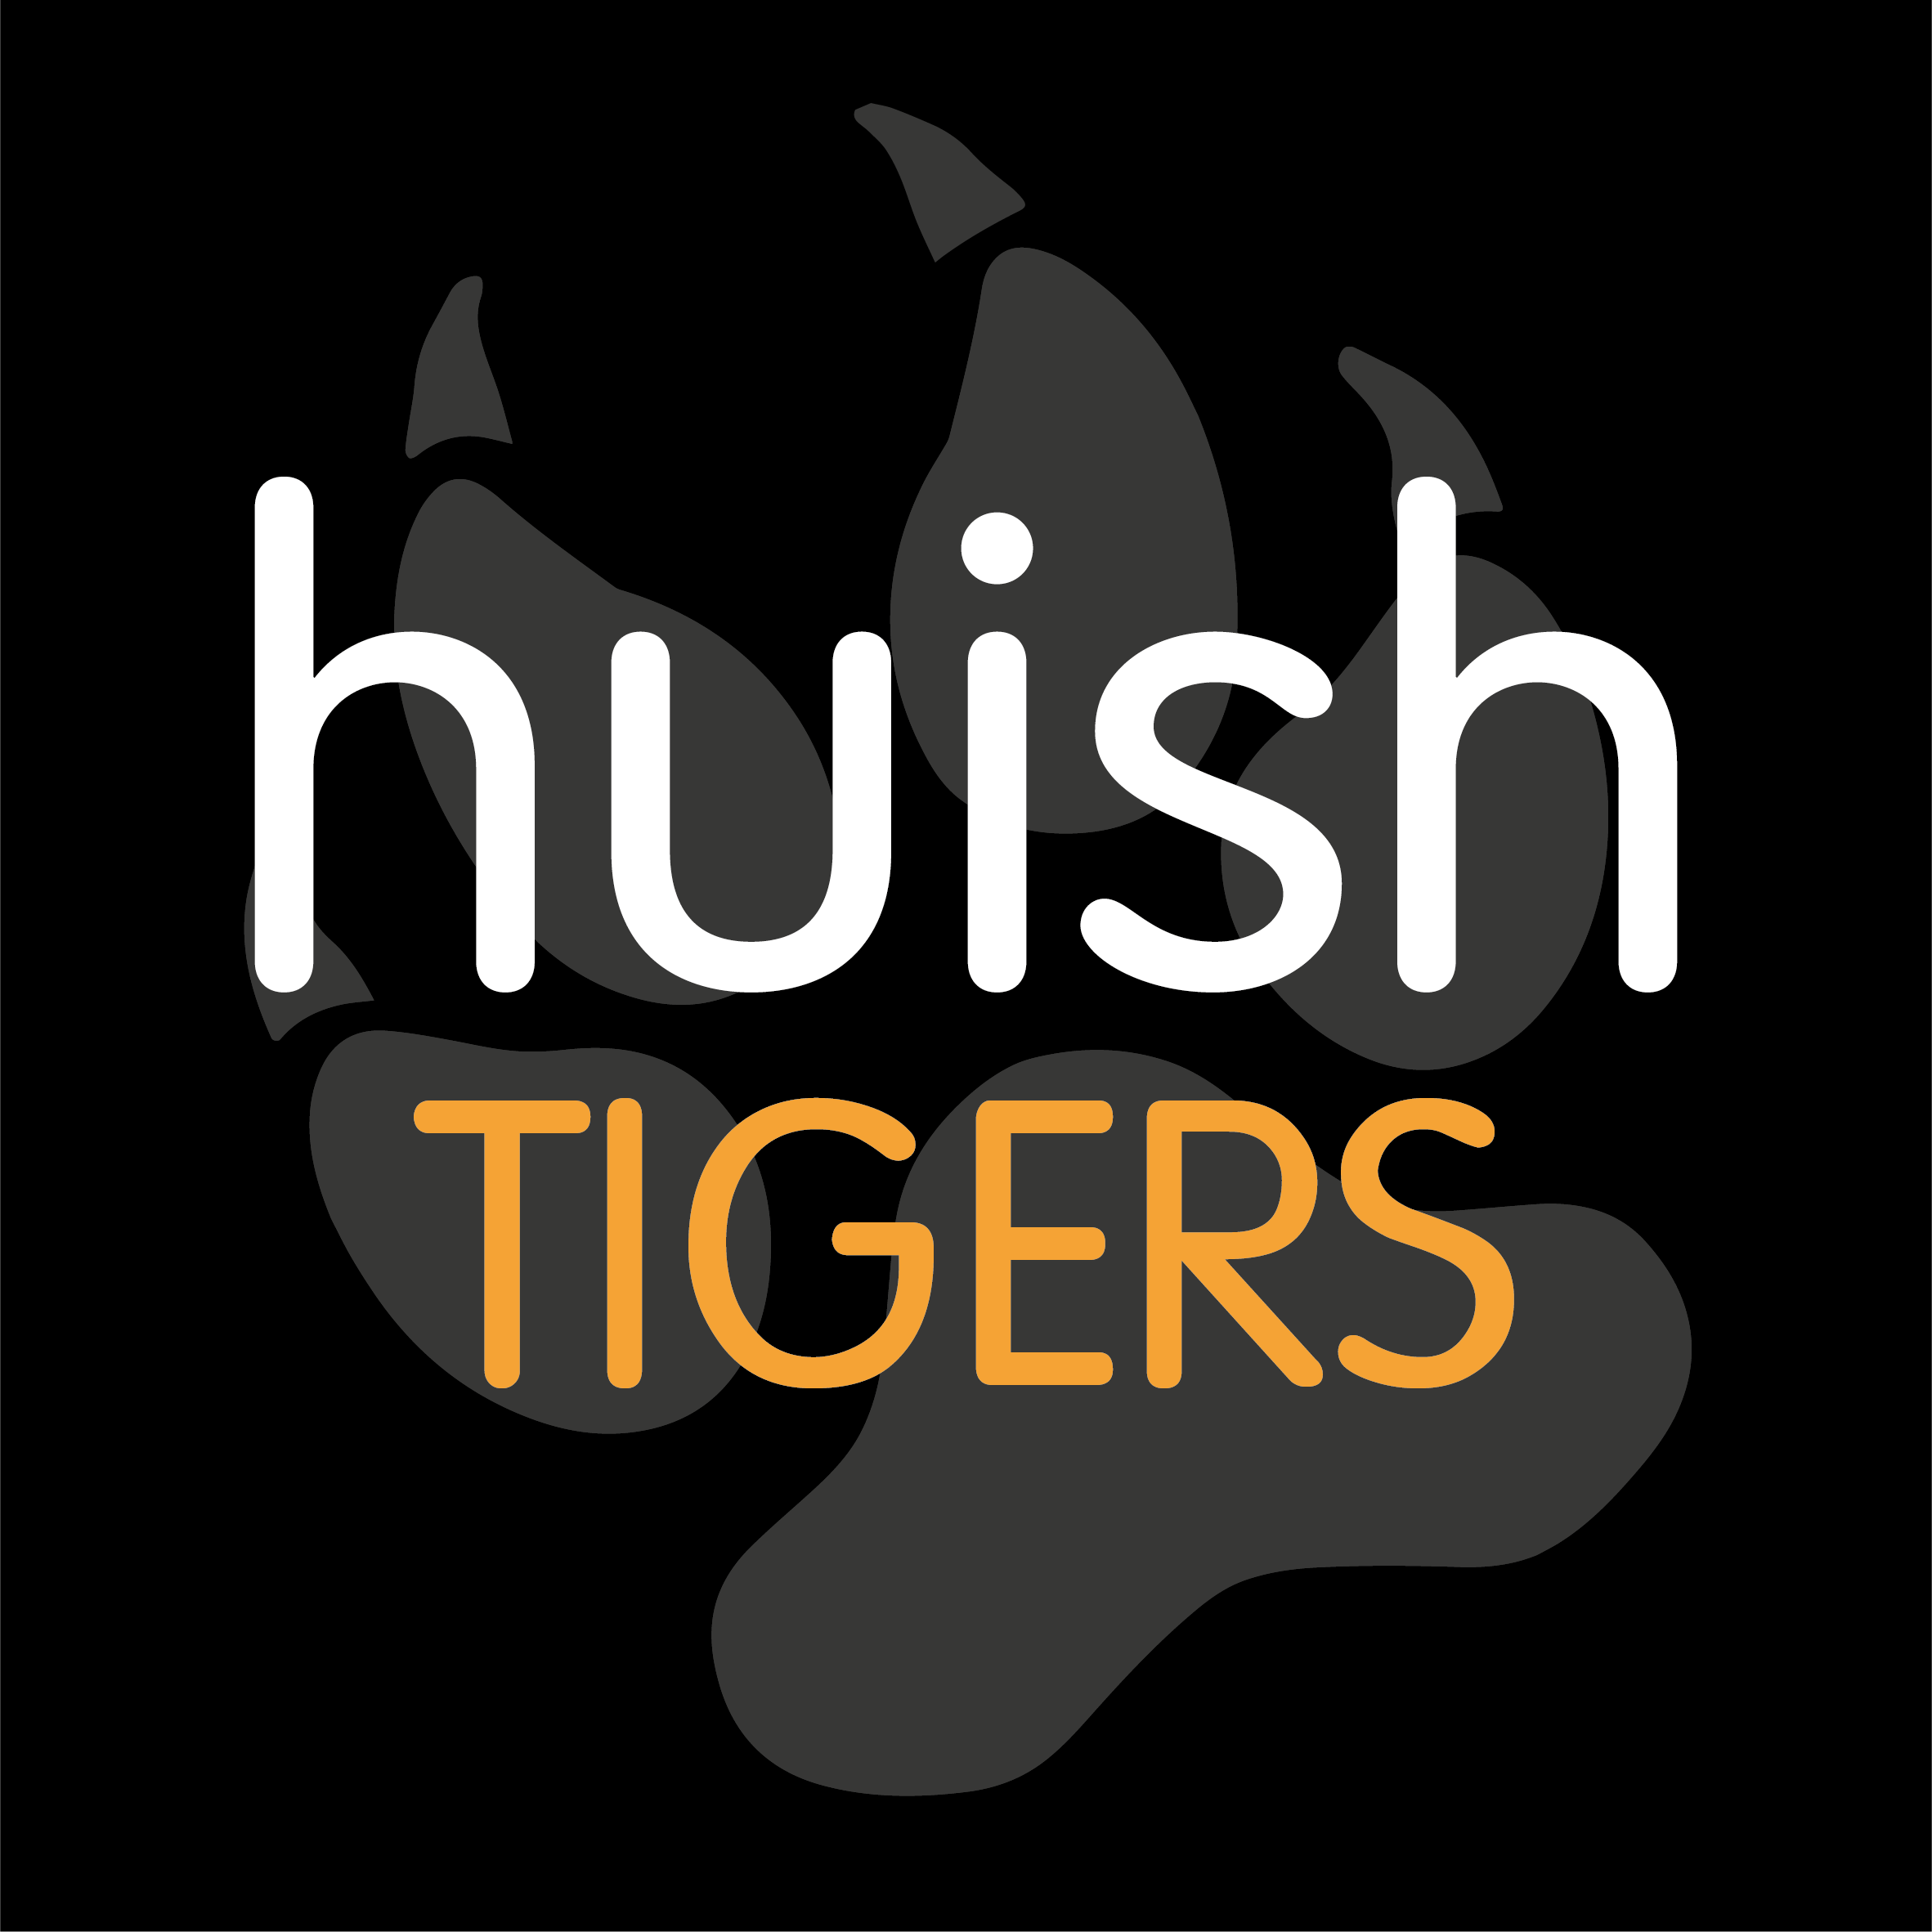 Huish Tigers Football Club